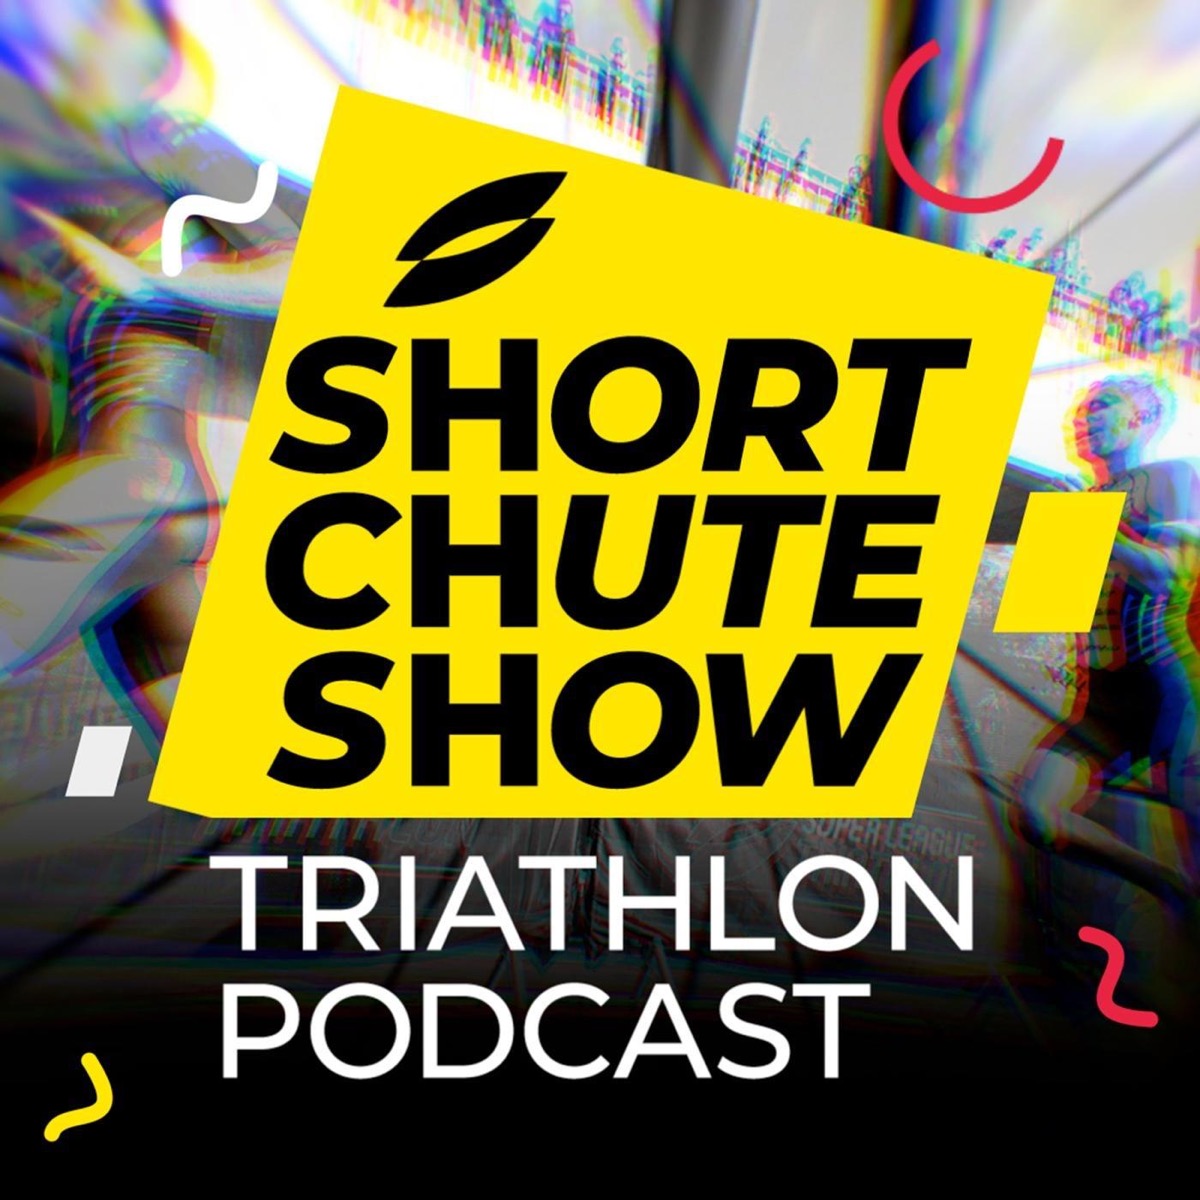 Marten 'The Real Deal' Van Riel's Year | Short Chute Triathlon Show Season  2022 | Episode 1 - Short Chute Triathlon Show | Lyssna här | Poddtoppen.se